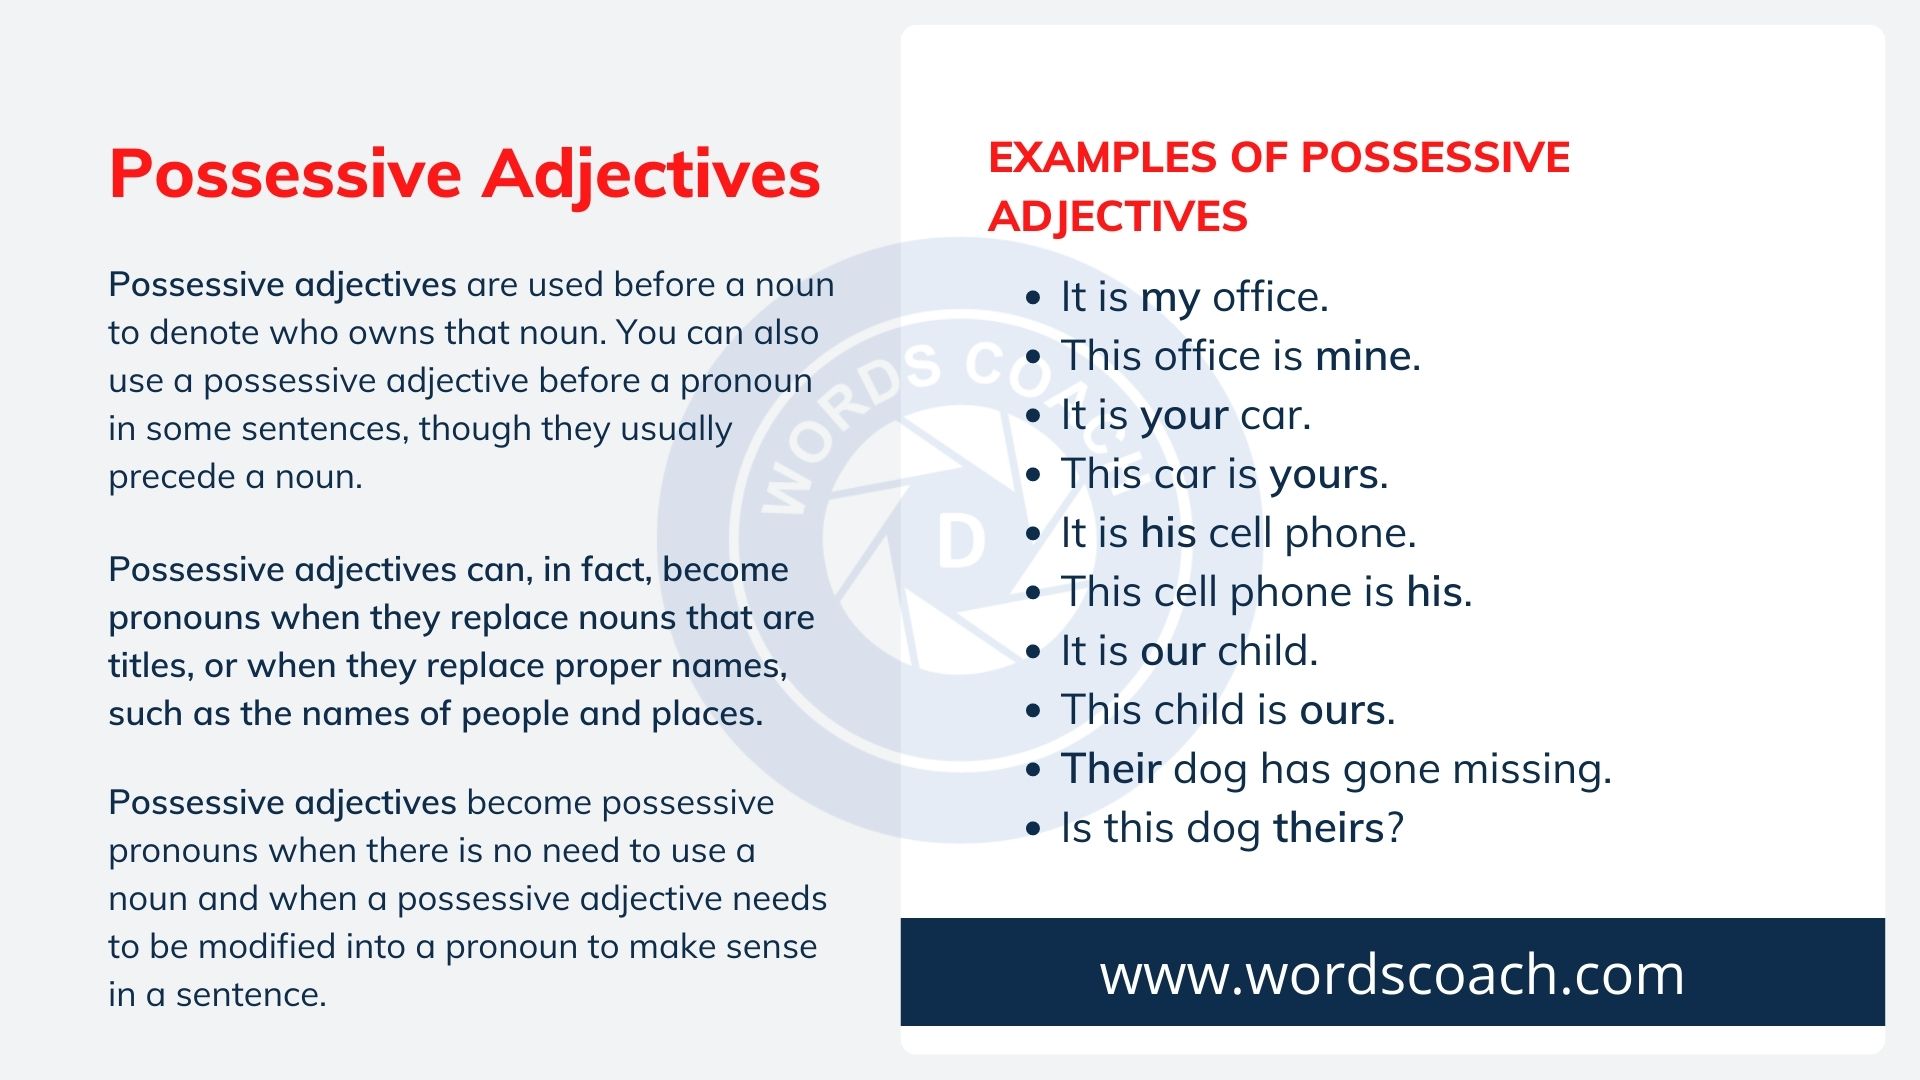 Possessive Adjectives - wordscoach.com